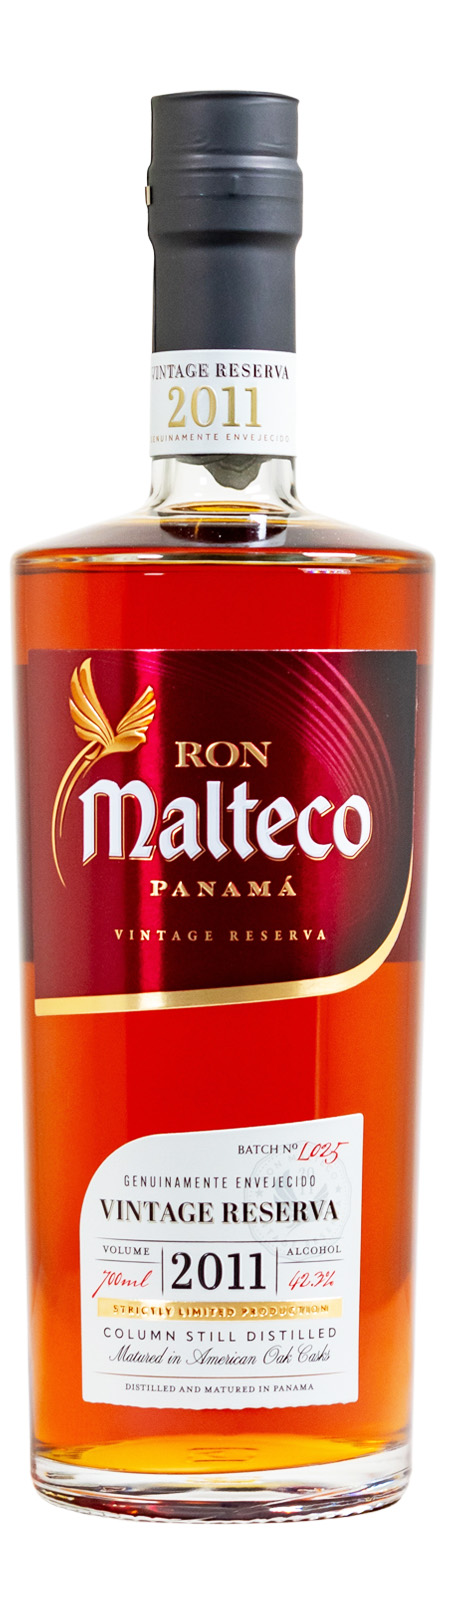 Malteco Vintage Reserva 2011 - 0,7L 42,3% vol